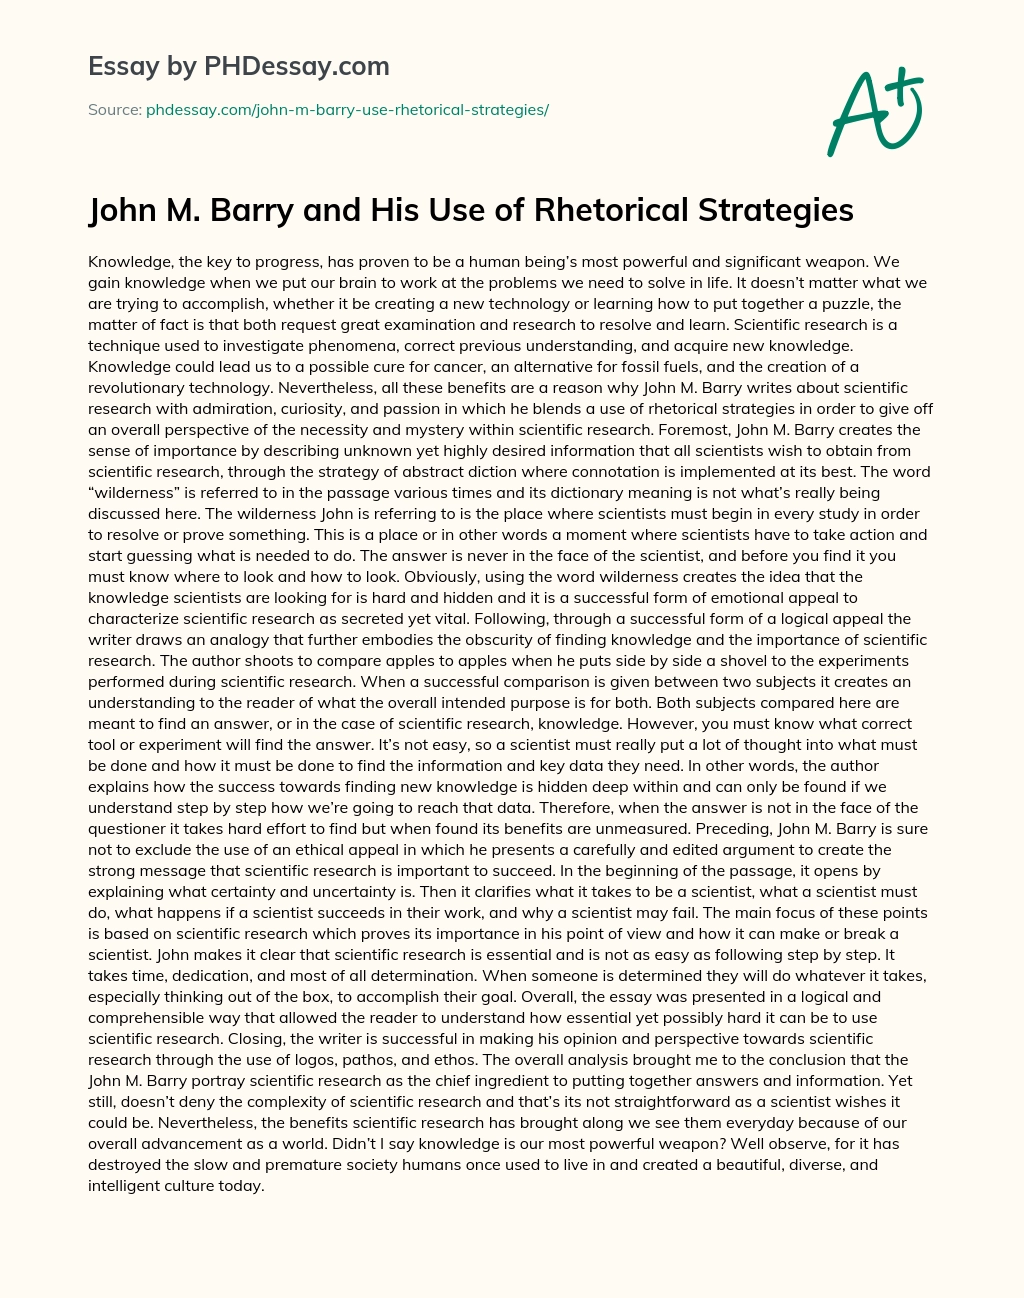 John M. Barry and His Use of Rhetorical Strategies essay